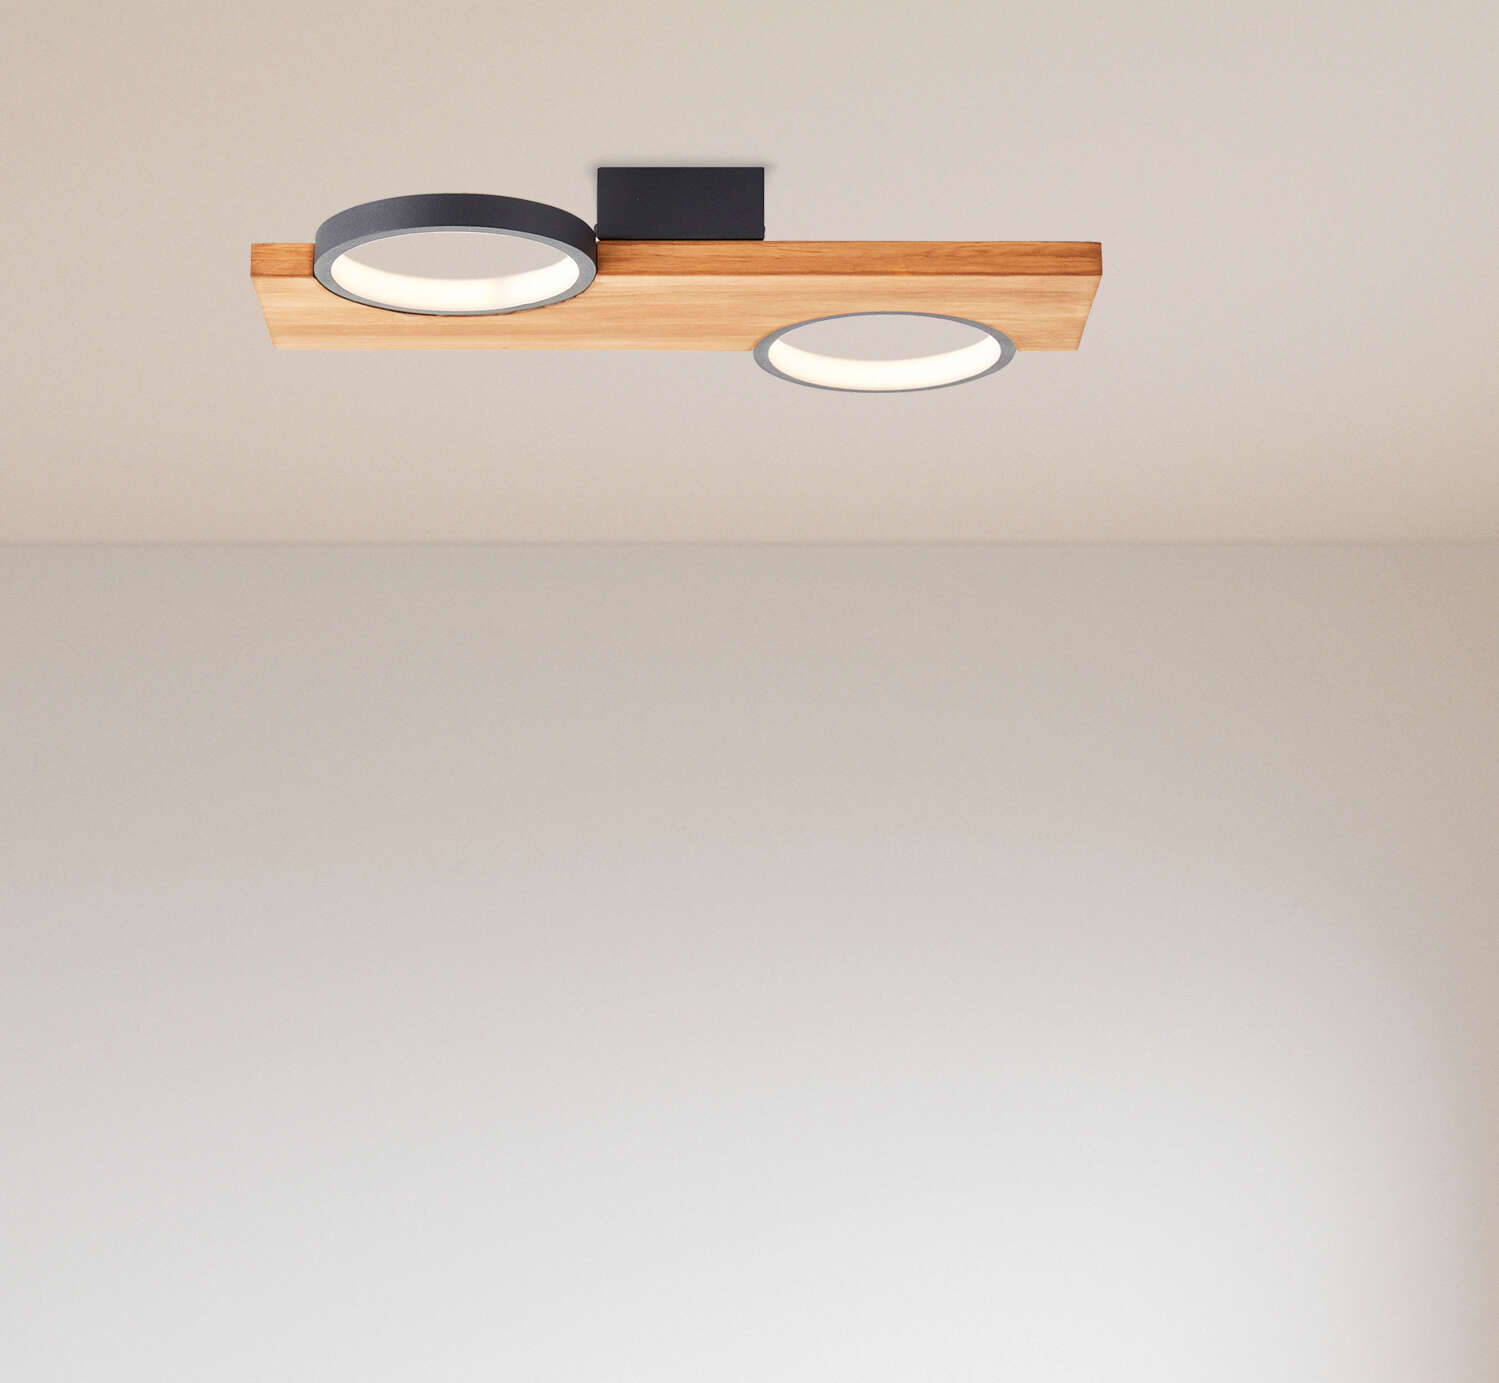             Wooden ceiling light - Elena 1 - Brown
        